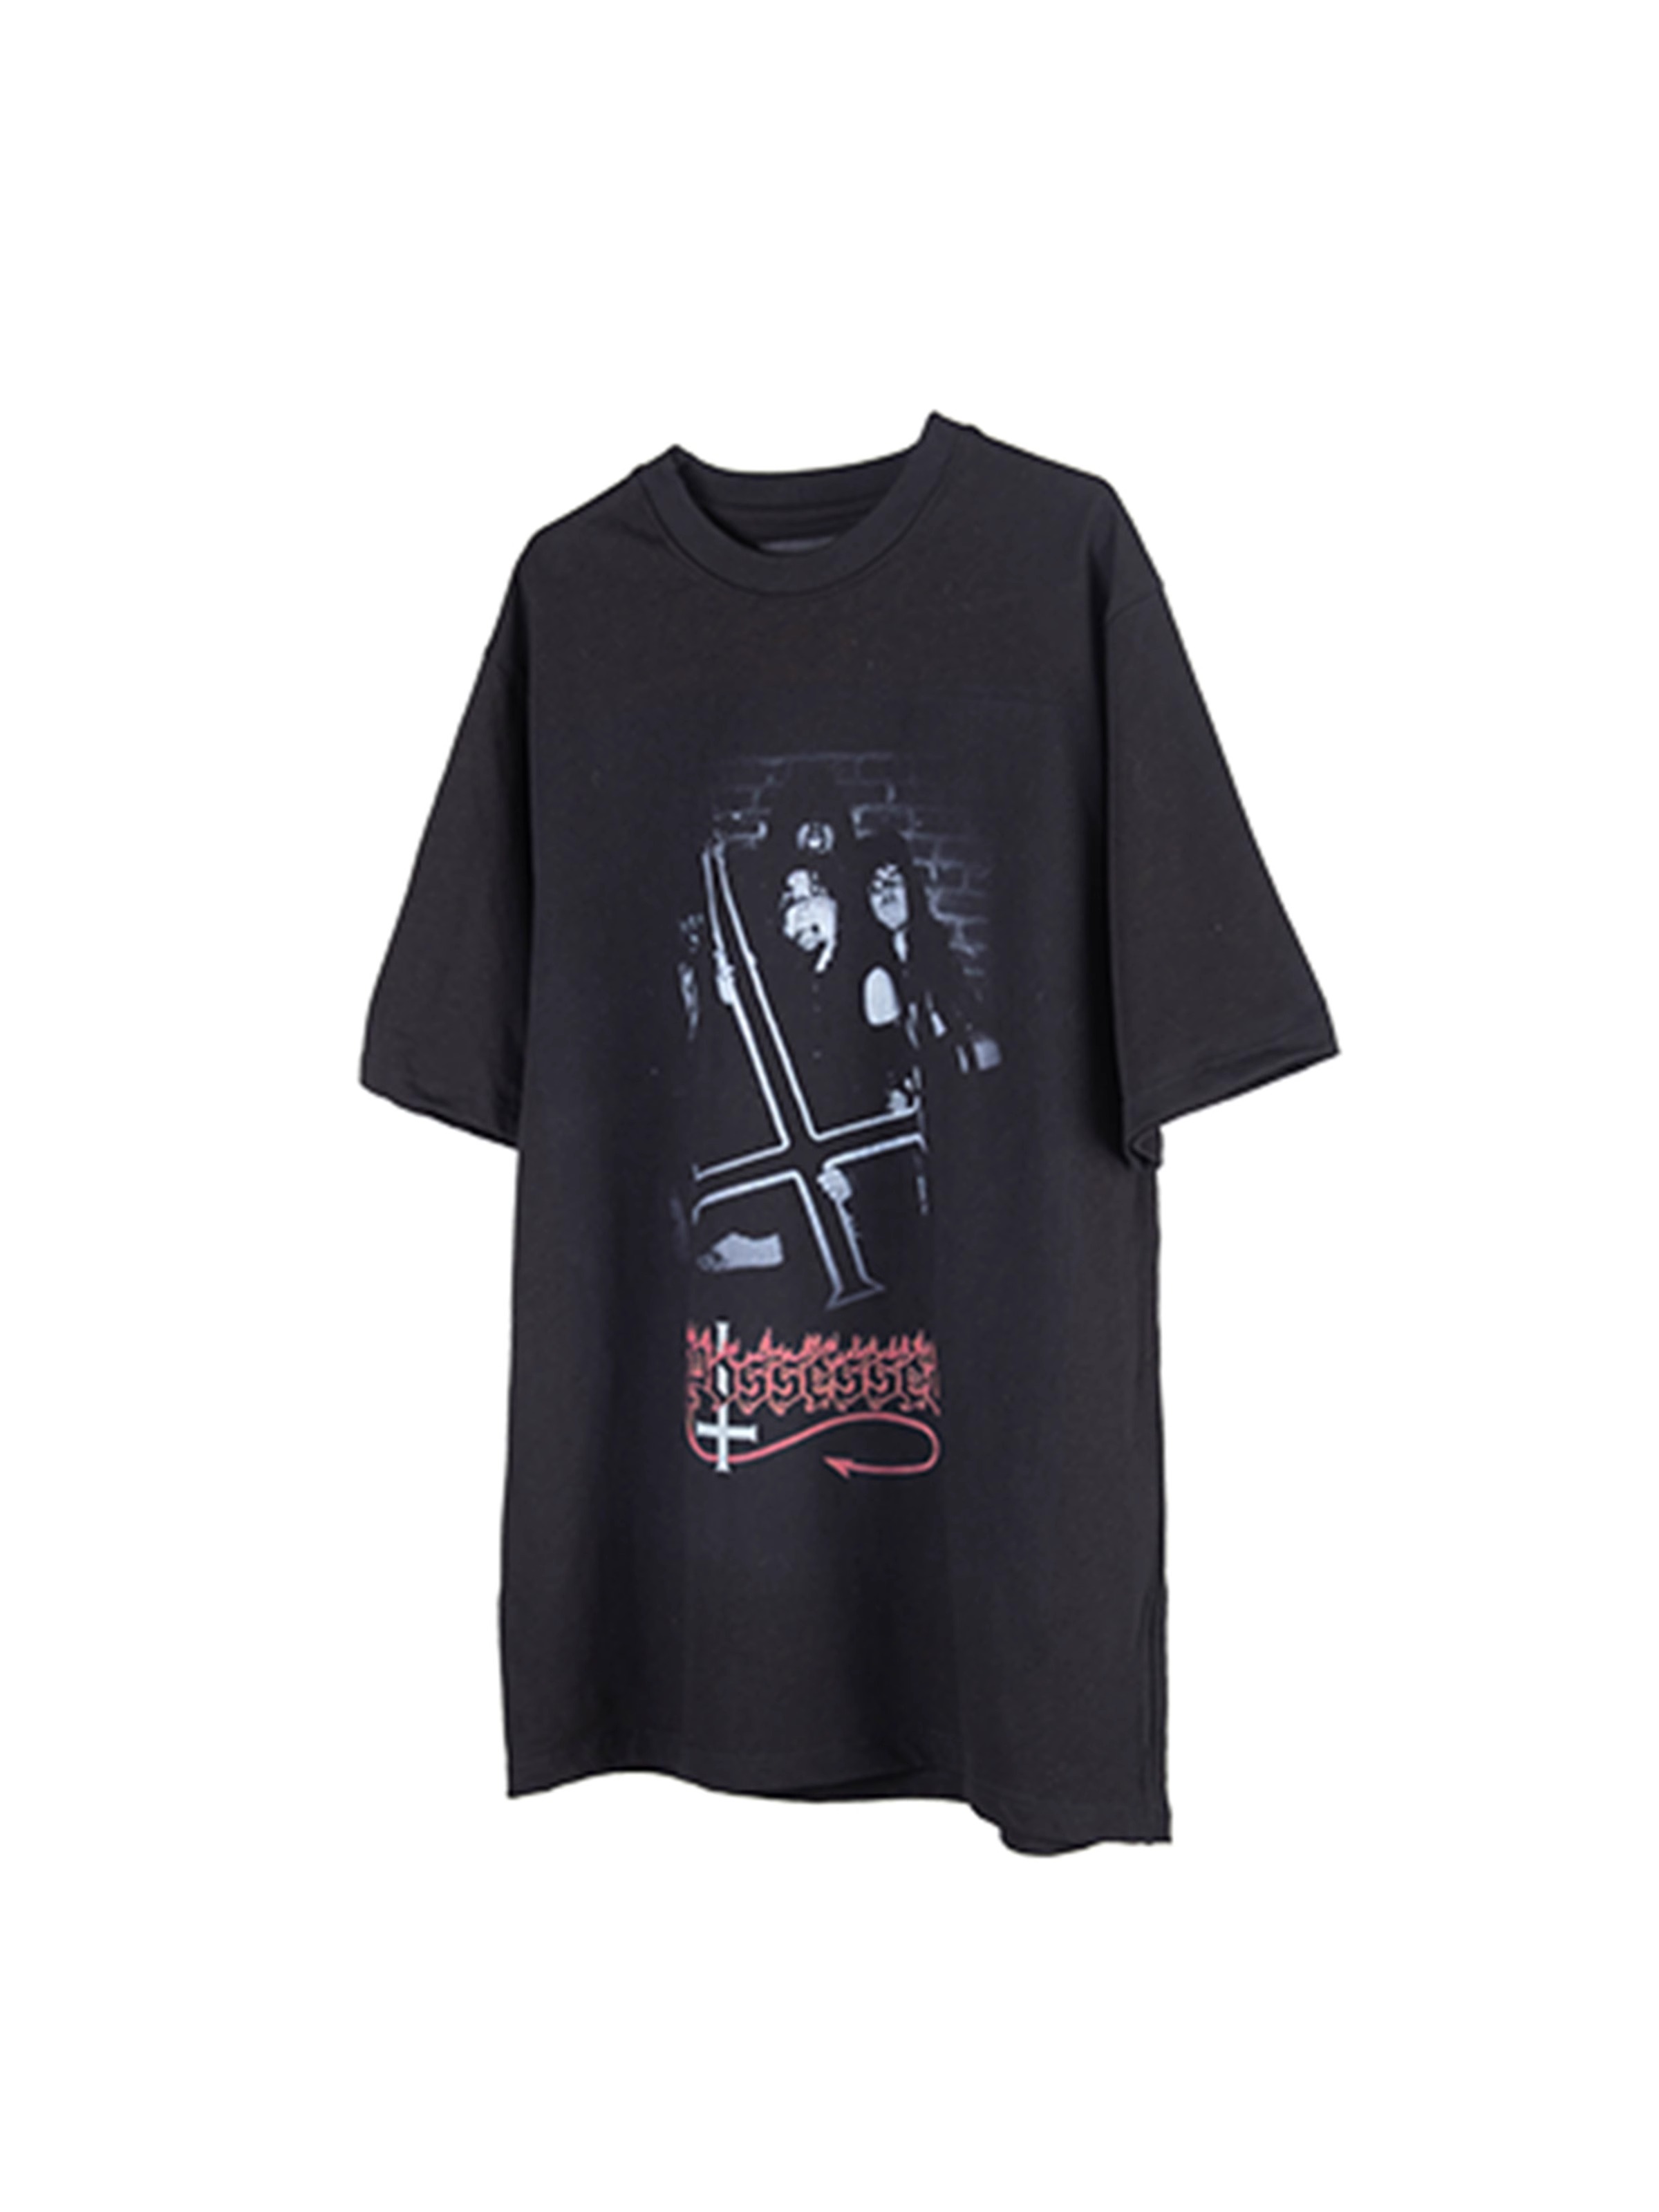 GOCHASKERO Band Print T-shirt